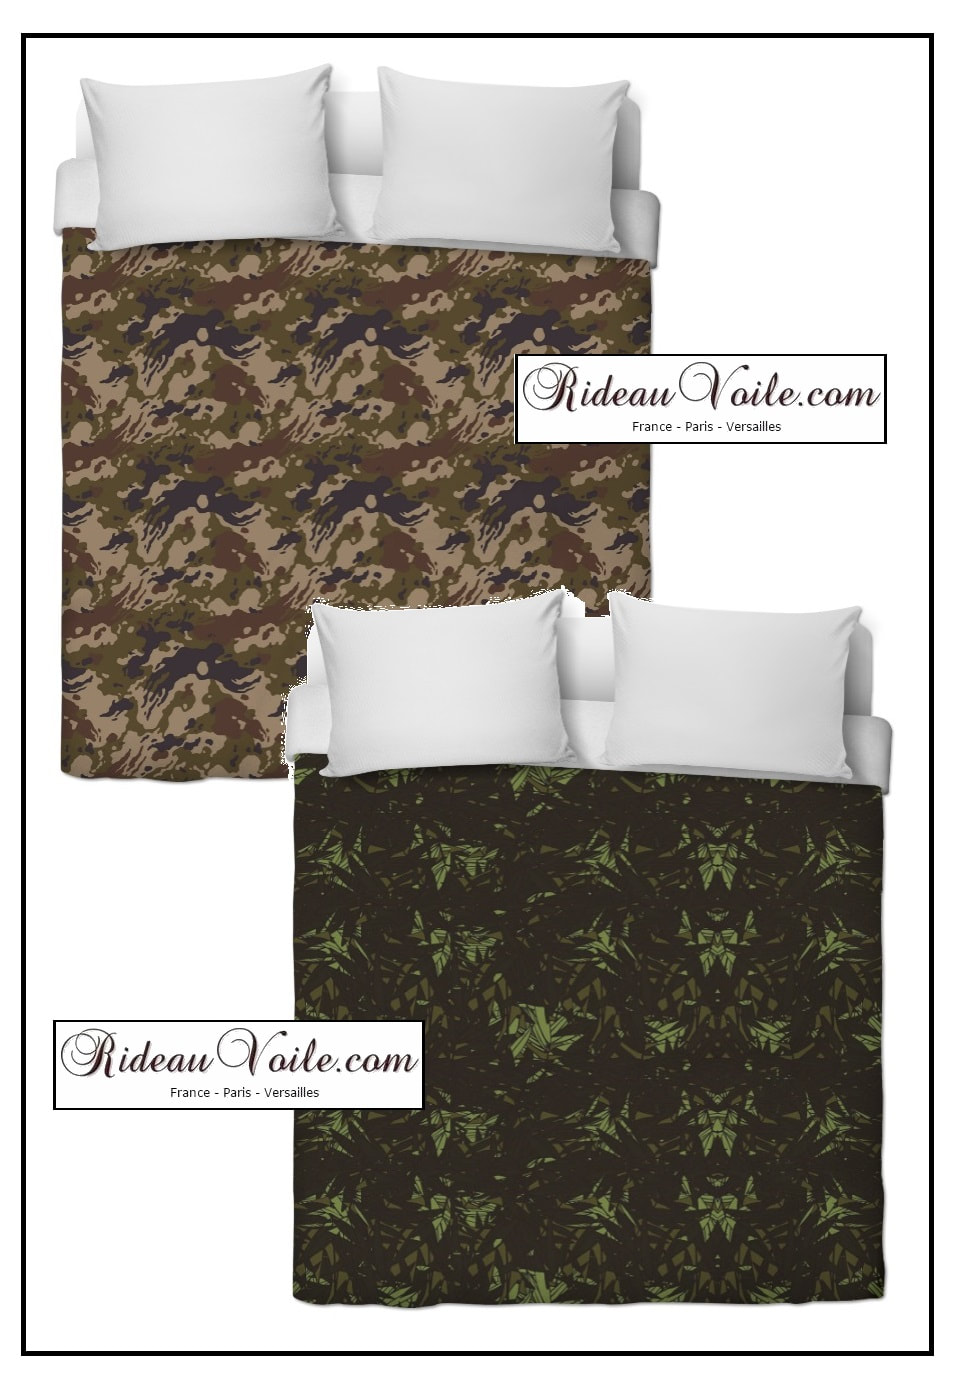 #tissu#camouflage#décoration#textile#motif#militaire#tapisserie#au#mètre#ameublement#ignifuge#nonfeu#rideau#surmesure#​fabric, camouflage, military, by the meter, curtain, cushion, comforter, armchair, seat, booster, upholstery, upholstery, duvet, cover, pillow, cushion, curtain, drapes, lampshade, armchair, fabric, army, pattern, ткань с камуфляжным рисунком, занавес, Tarnmuster Stoff, vorhang, tenda, fuggony, stof, Monster, gardin, tela of camouflage, Cortina naamiointikuvio, kangas, Verho, ύφασμα, μοτίβο, καμουφλάζ, κουρτίνα, בד דפוס, הסוואה, וילון, tessuto, con, motivo, mimetico, gordijn, kurtyna, wzór w kamuflaż, занавес, ткань с камуфляжным, рисунком, kamouflagemönster, tyg,